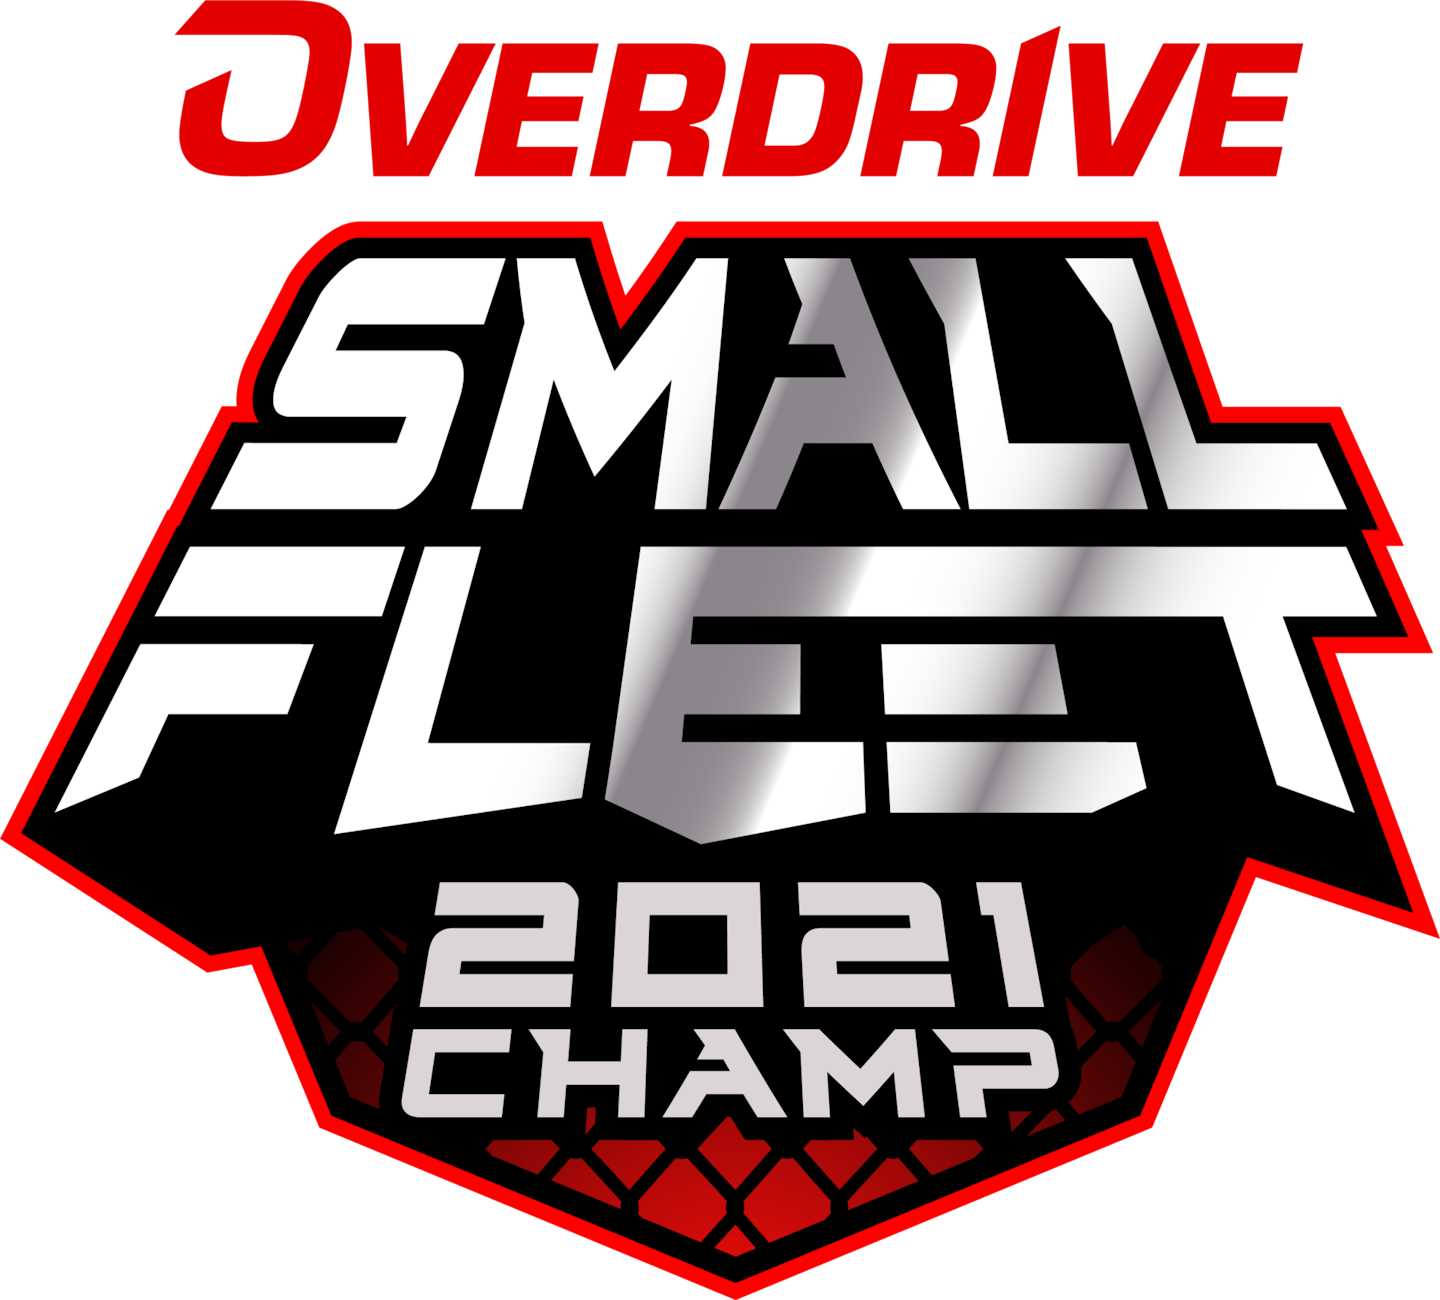 Overdrive small fleet champ 2021 logo